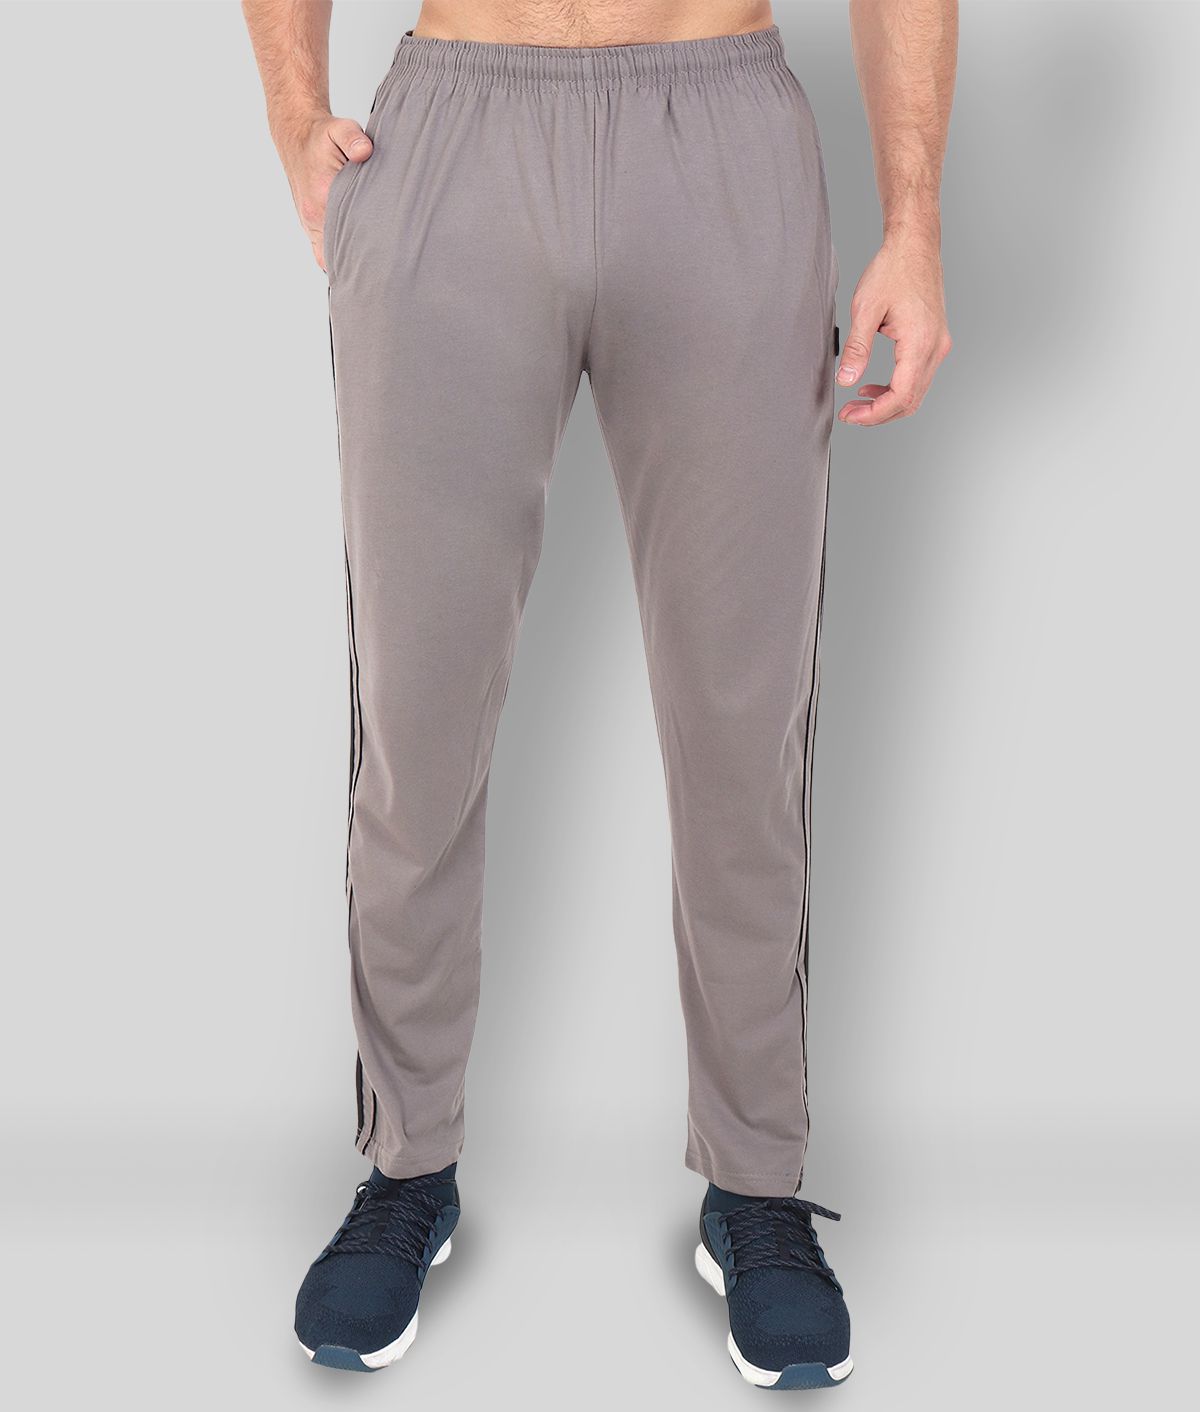     			Zeffit - Light Grey Cotton Blend Men's Trackpants ( Pack of 1 )